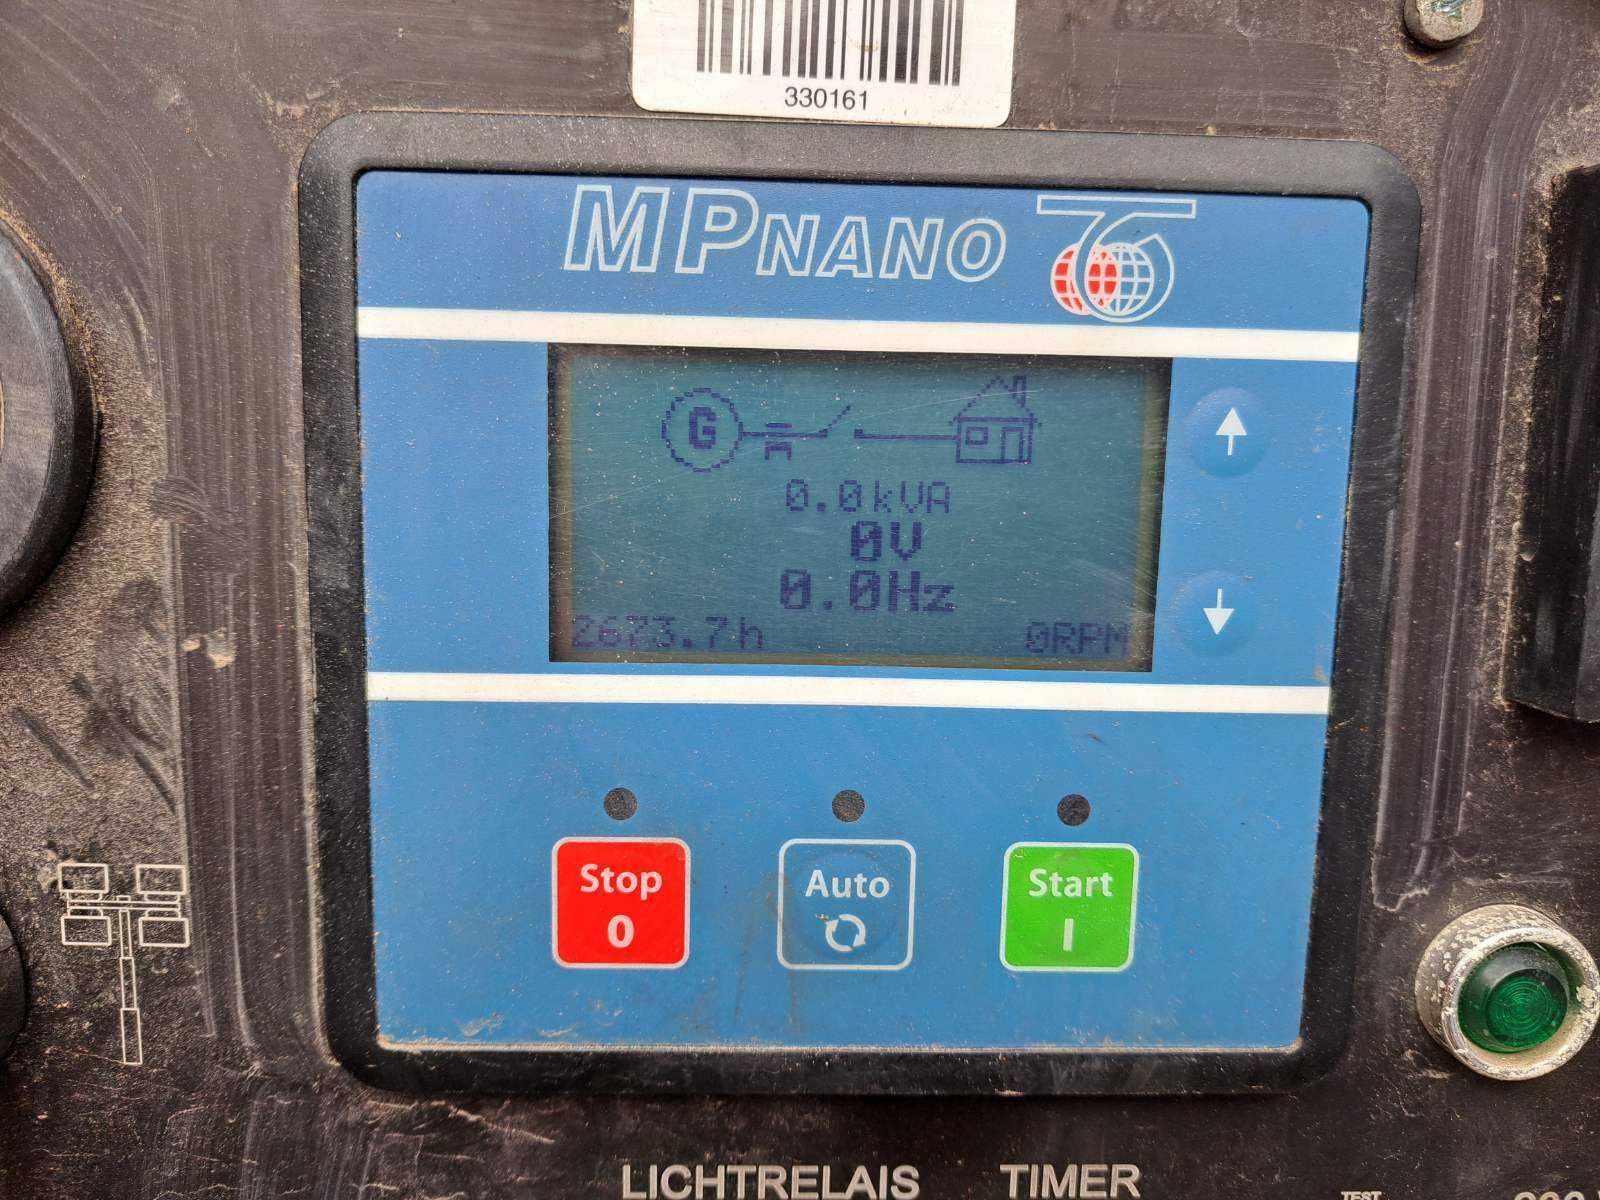 Maszt Oświetleniowy - Generac Battery Led-1